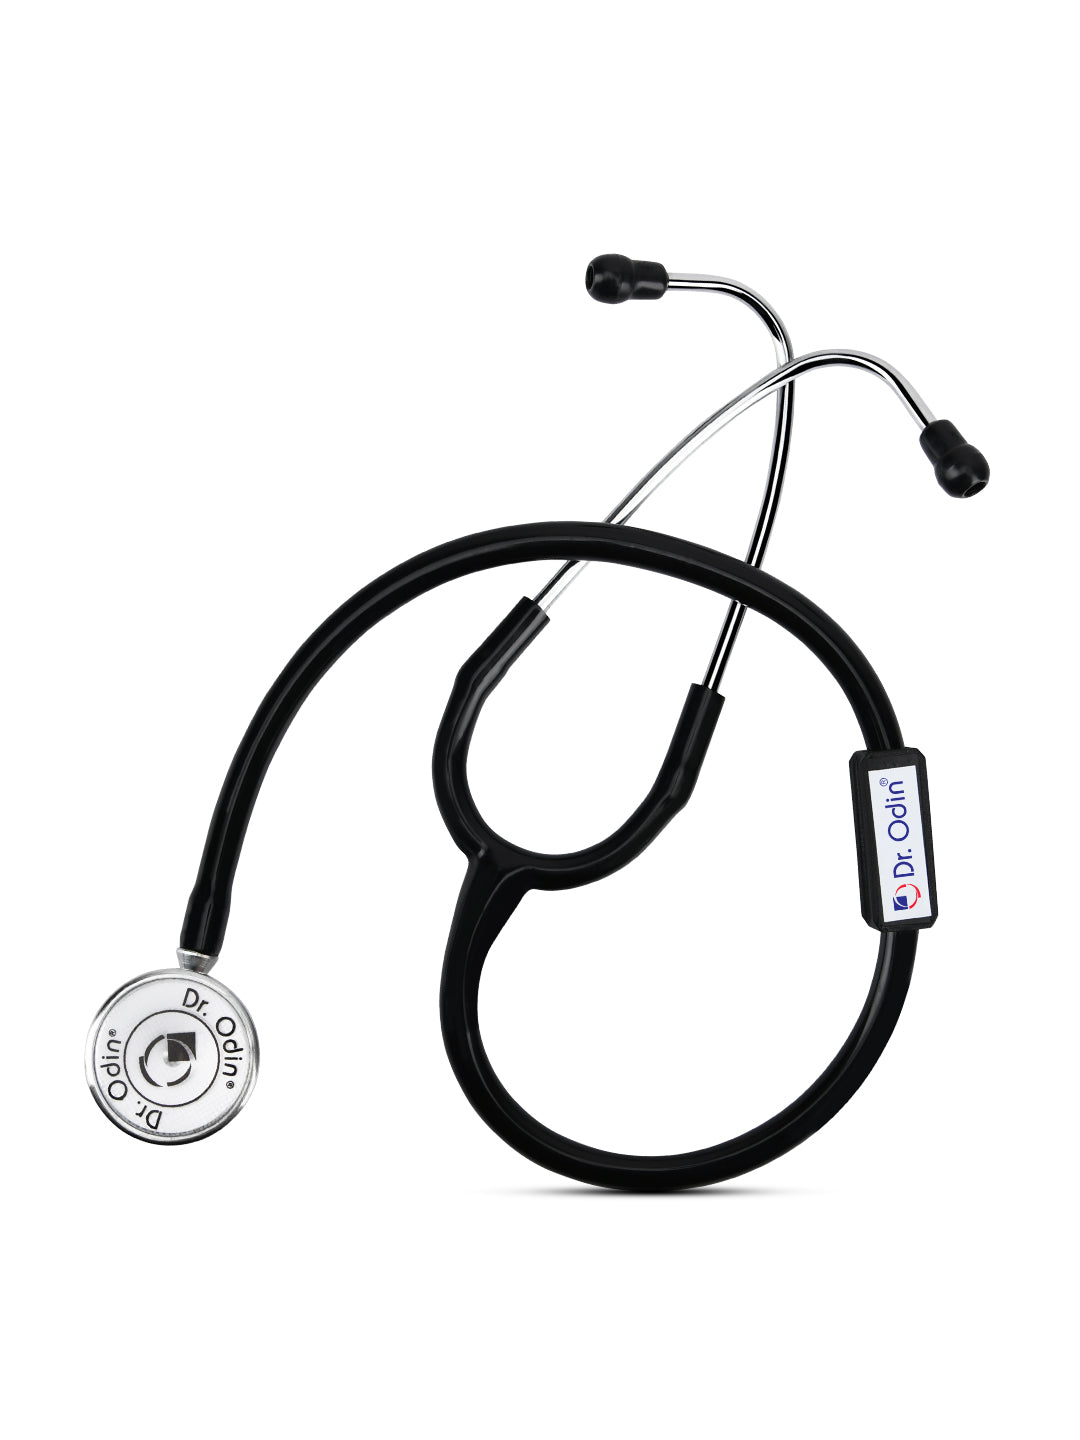 Dr. Odin Stethoscope Basic for Medical Professionals